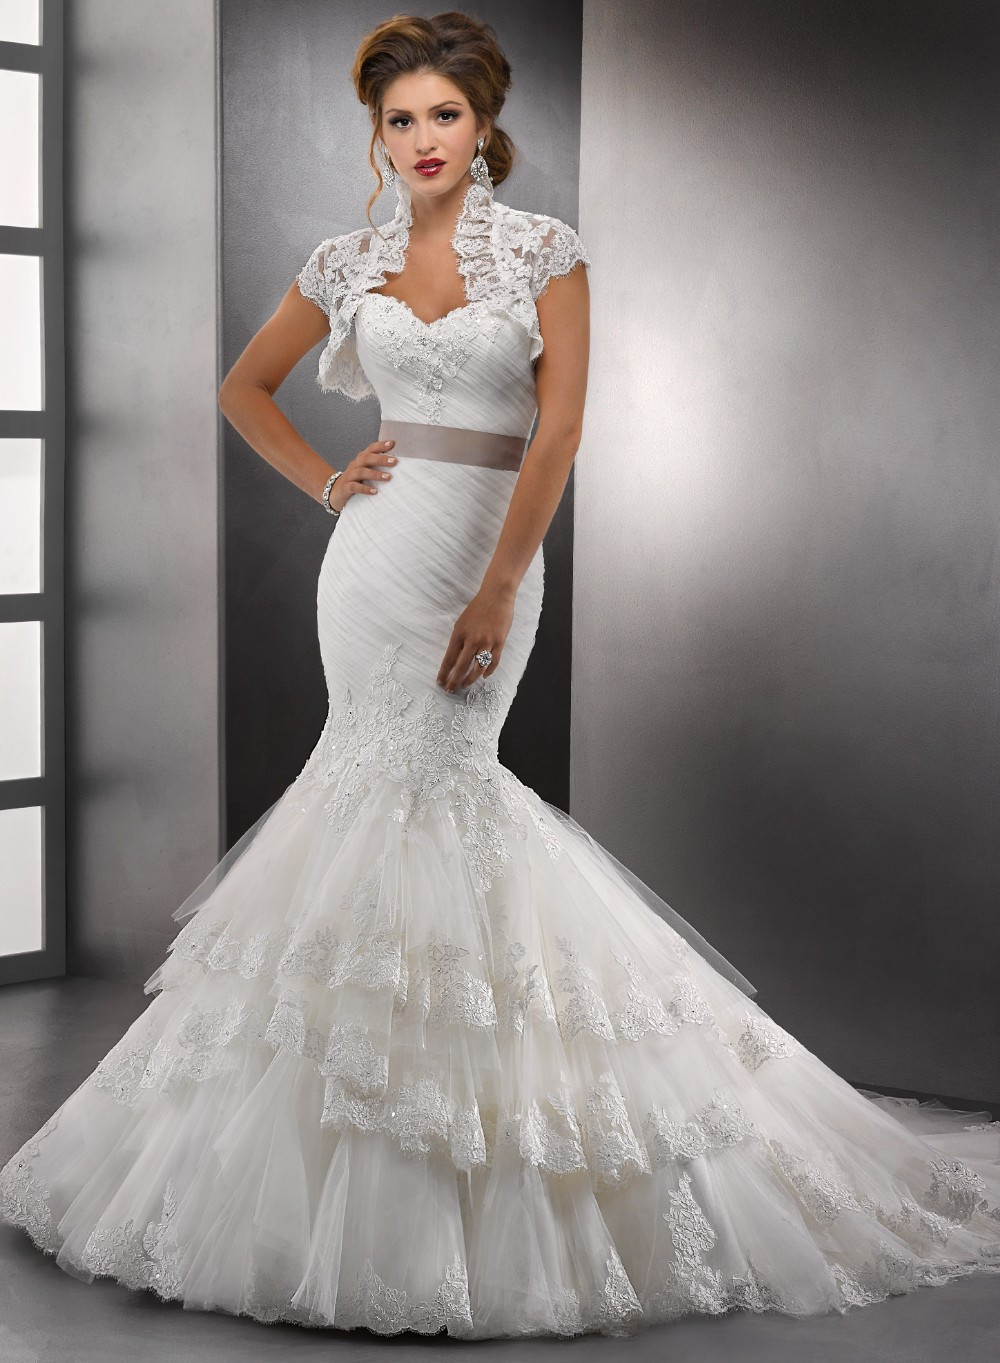 Strapless Mermaid Wedding Dresses
 Romantic Ruched Strapless Mermaid Wedding Dress 2015 Lace